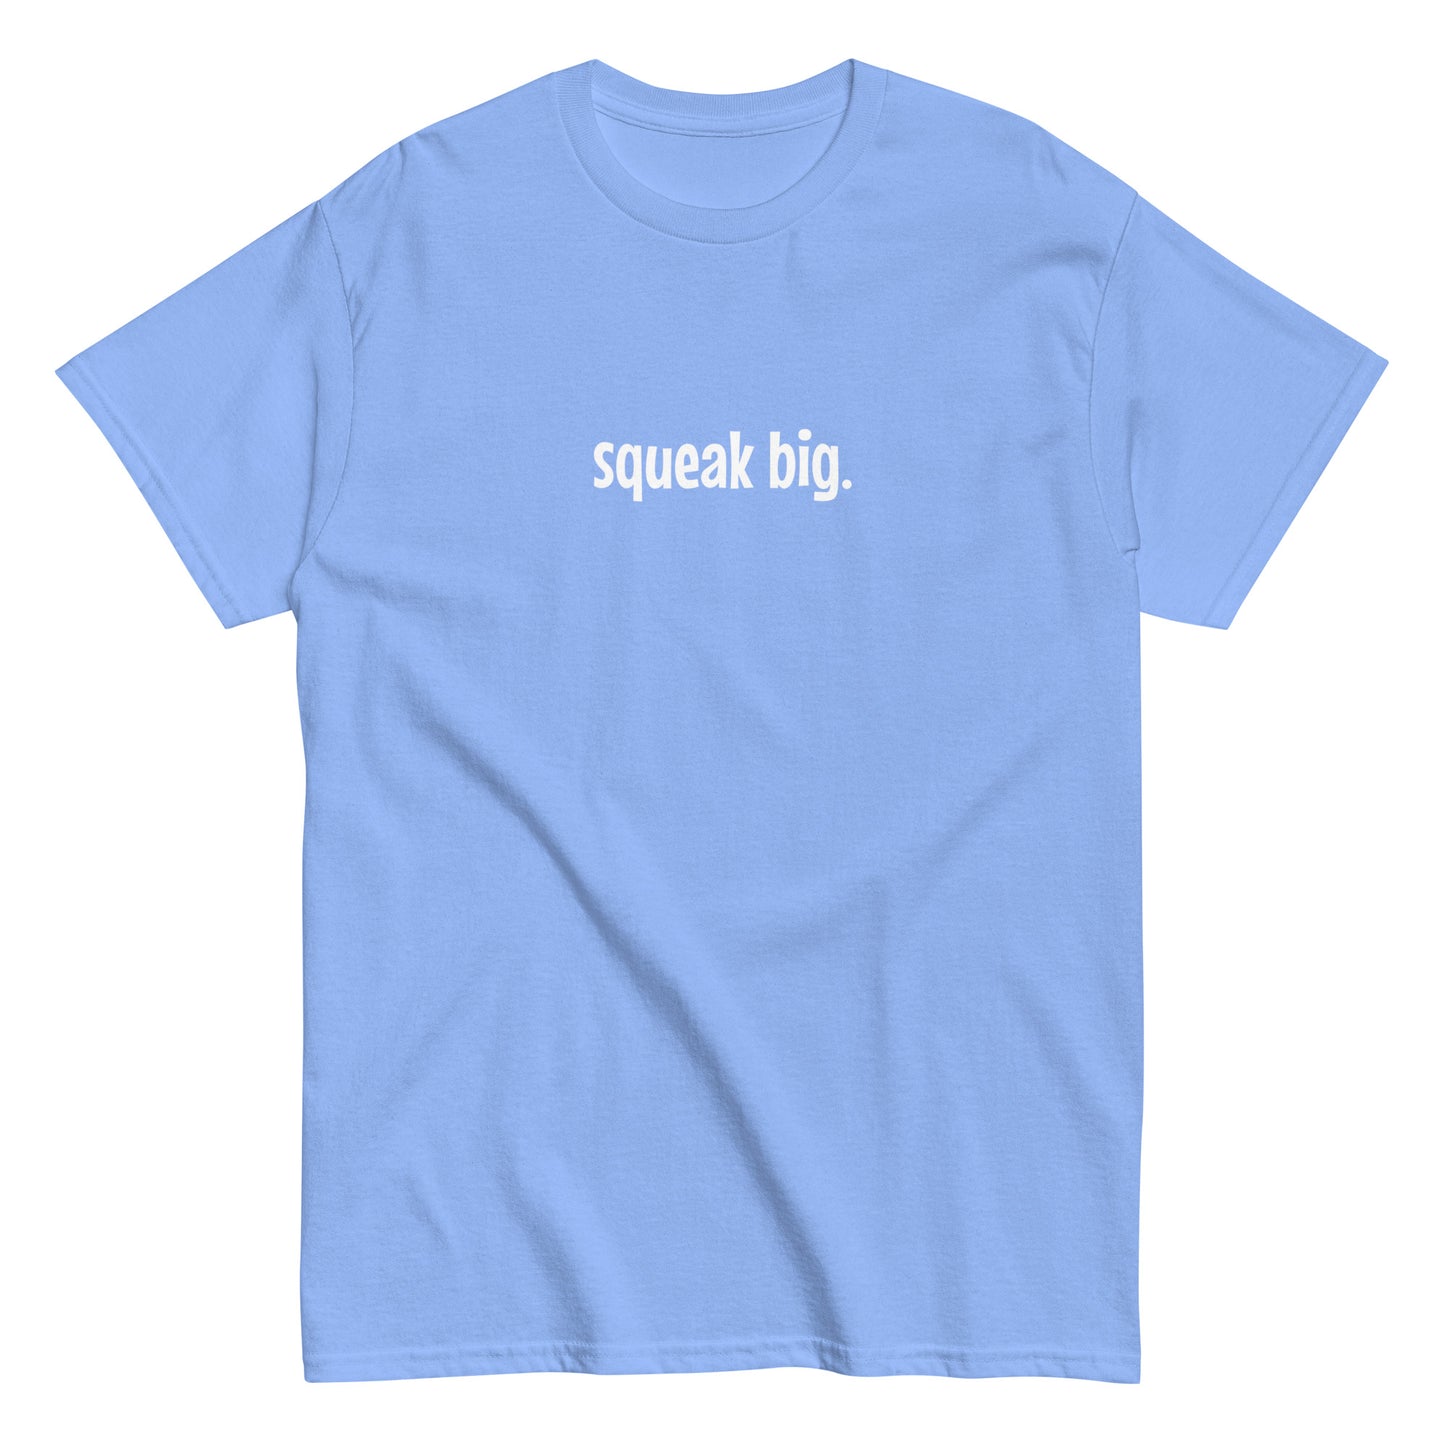 Squeak Big T-Shirt